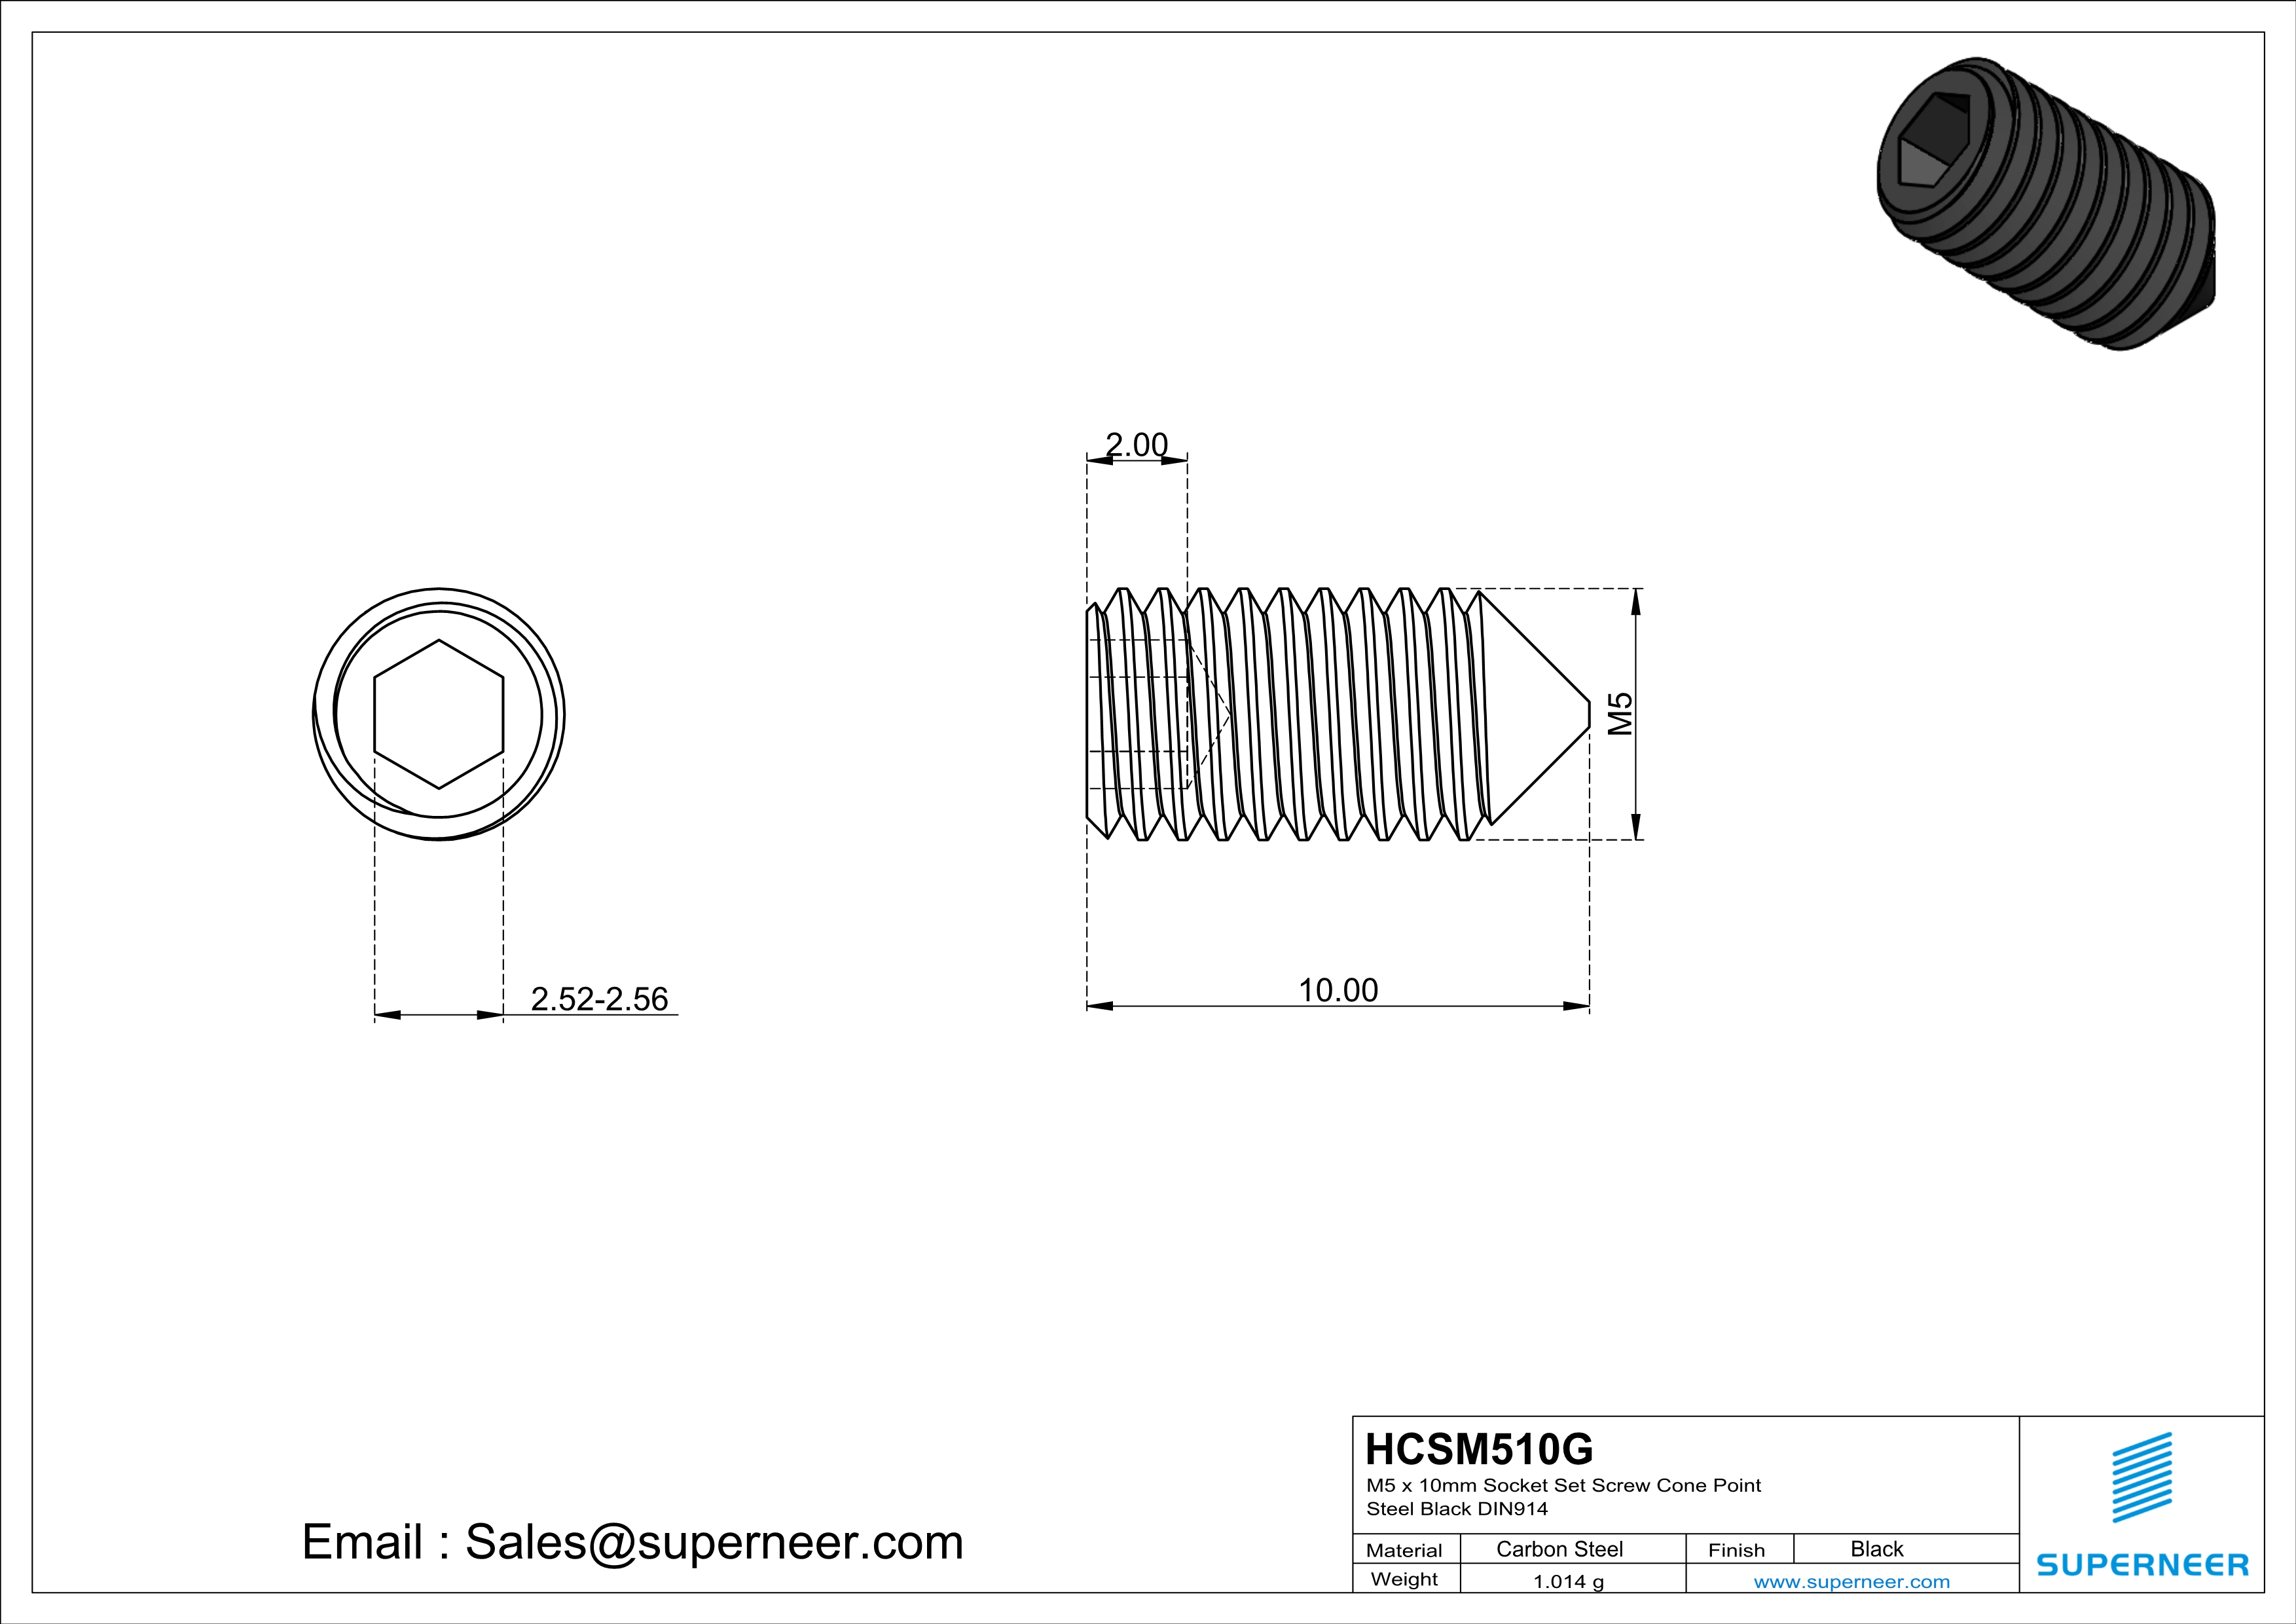 M5 x 10mm Socket Set Screw Cone Point 12.9 Carbon Steel Black DIN914